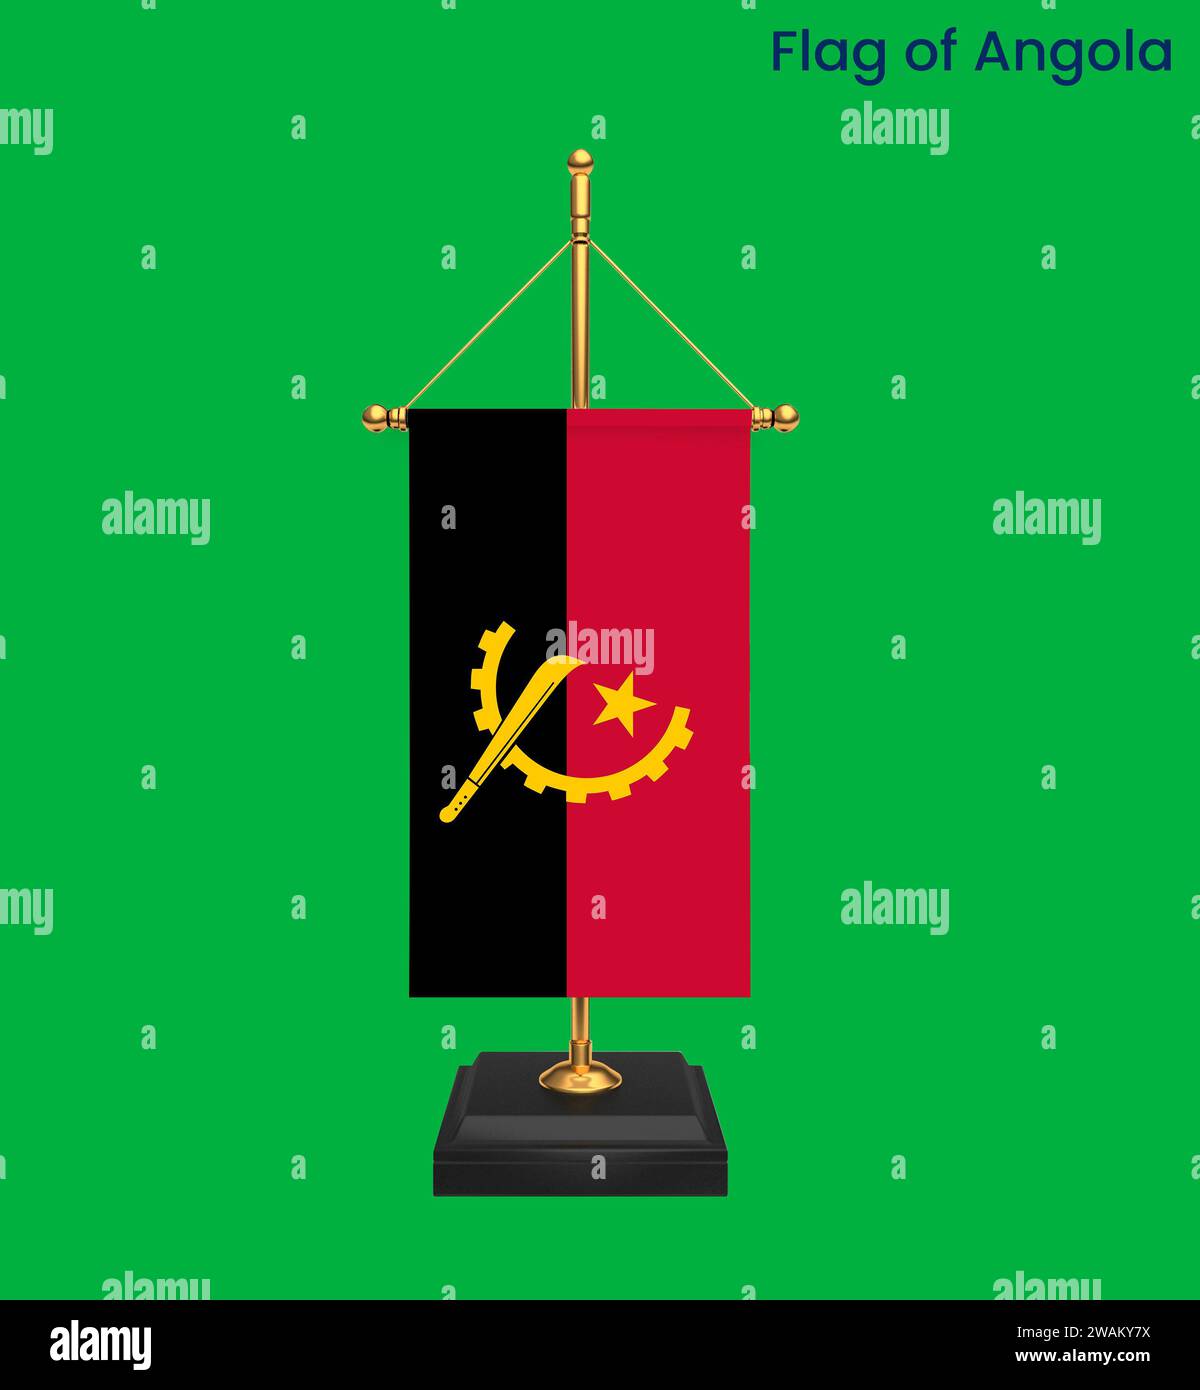 Hochdetaillierte Flagge von Angola. Nationale Flagge Angolas. Afrika. 3D-Abbildung. Stockfoto